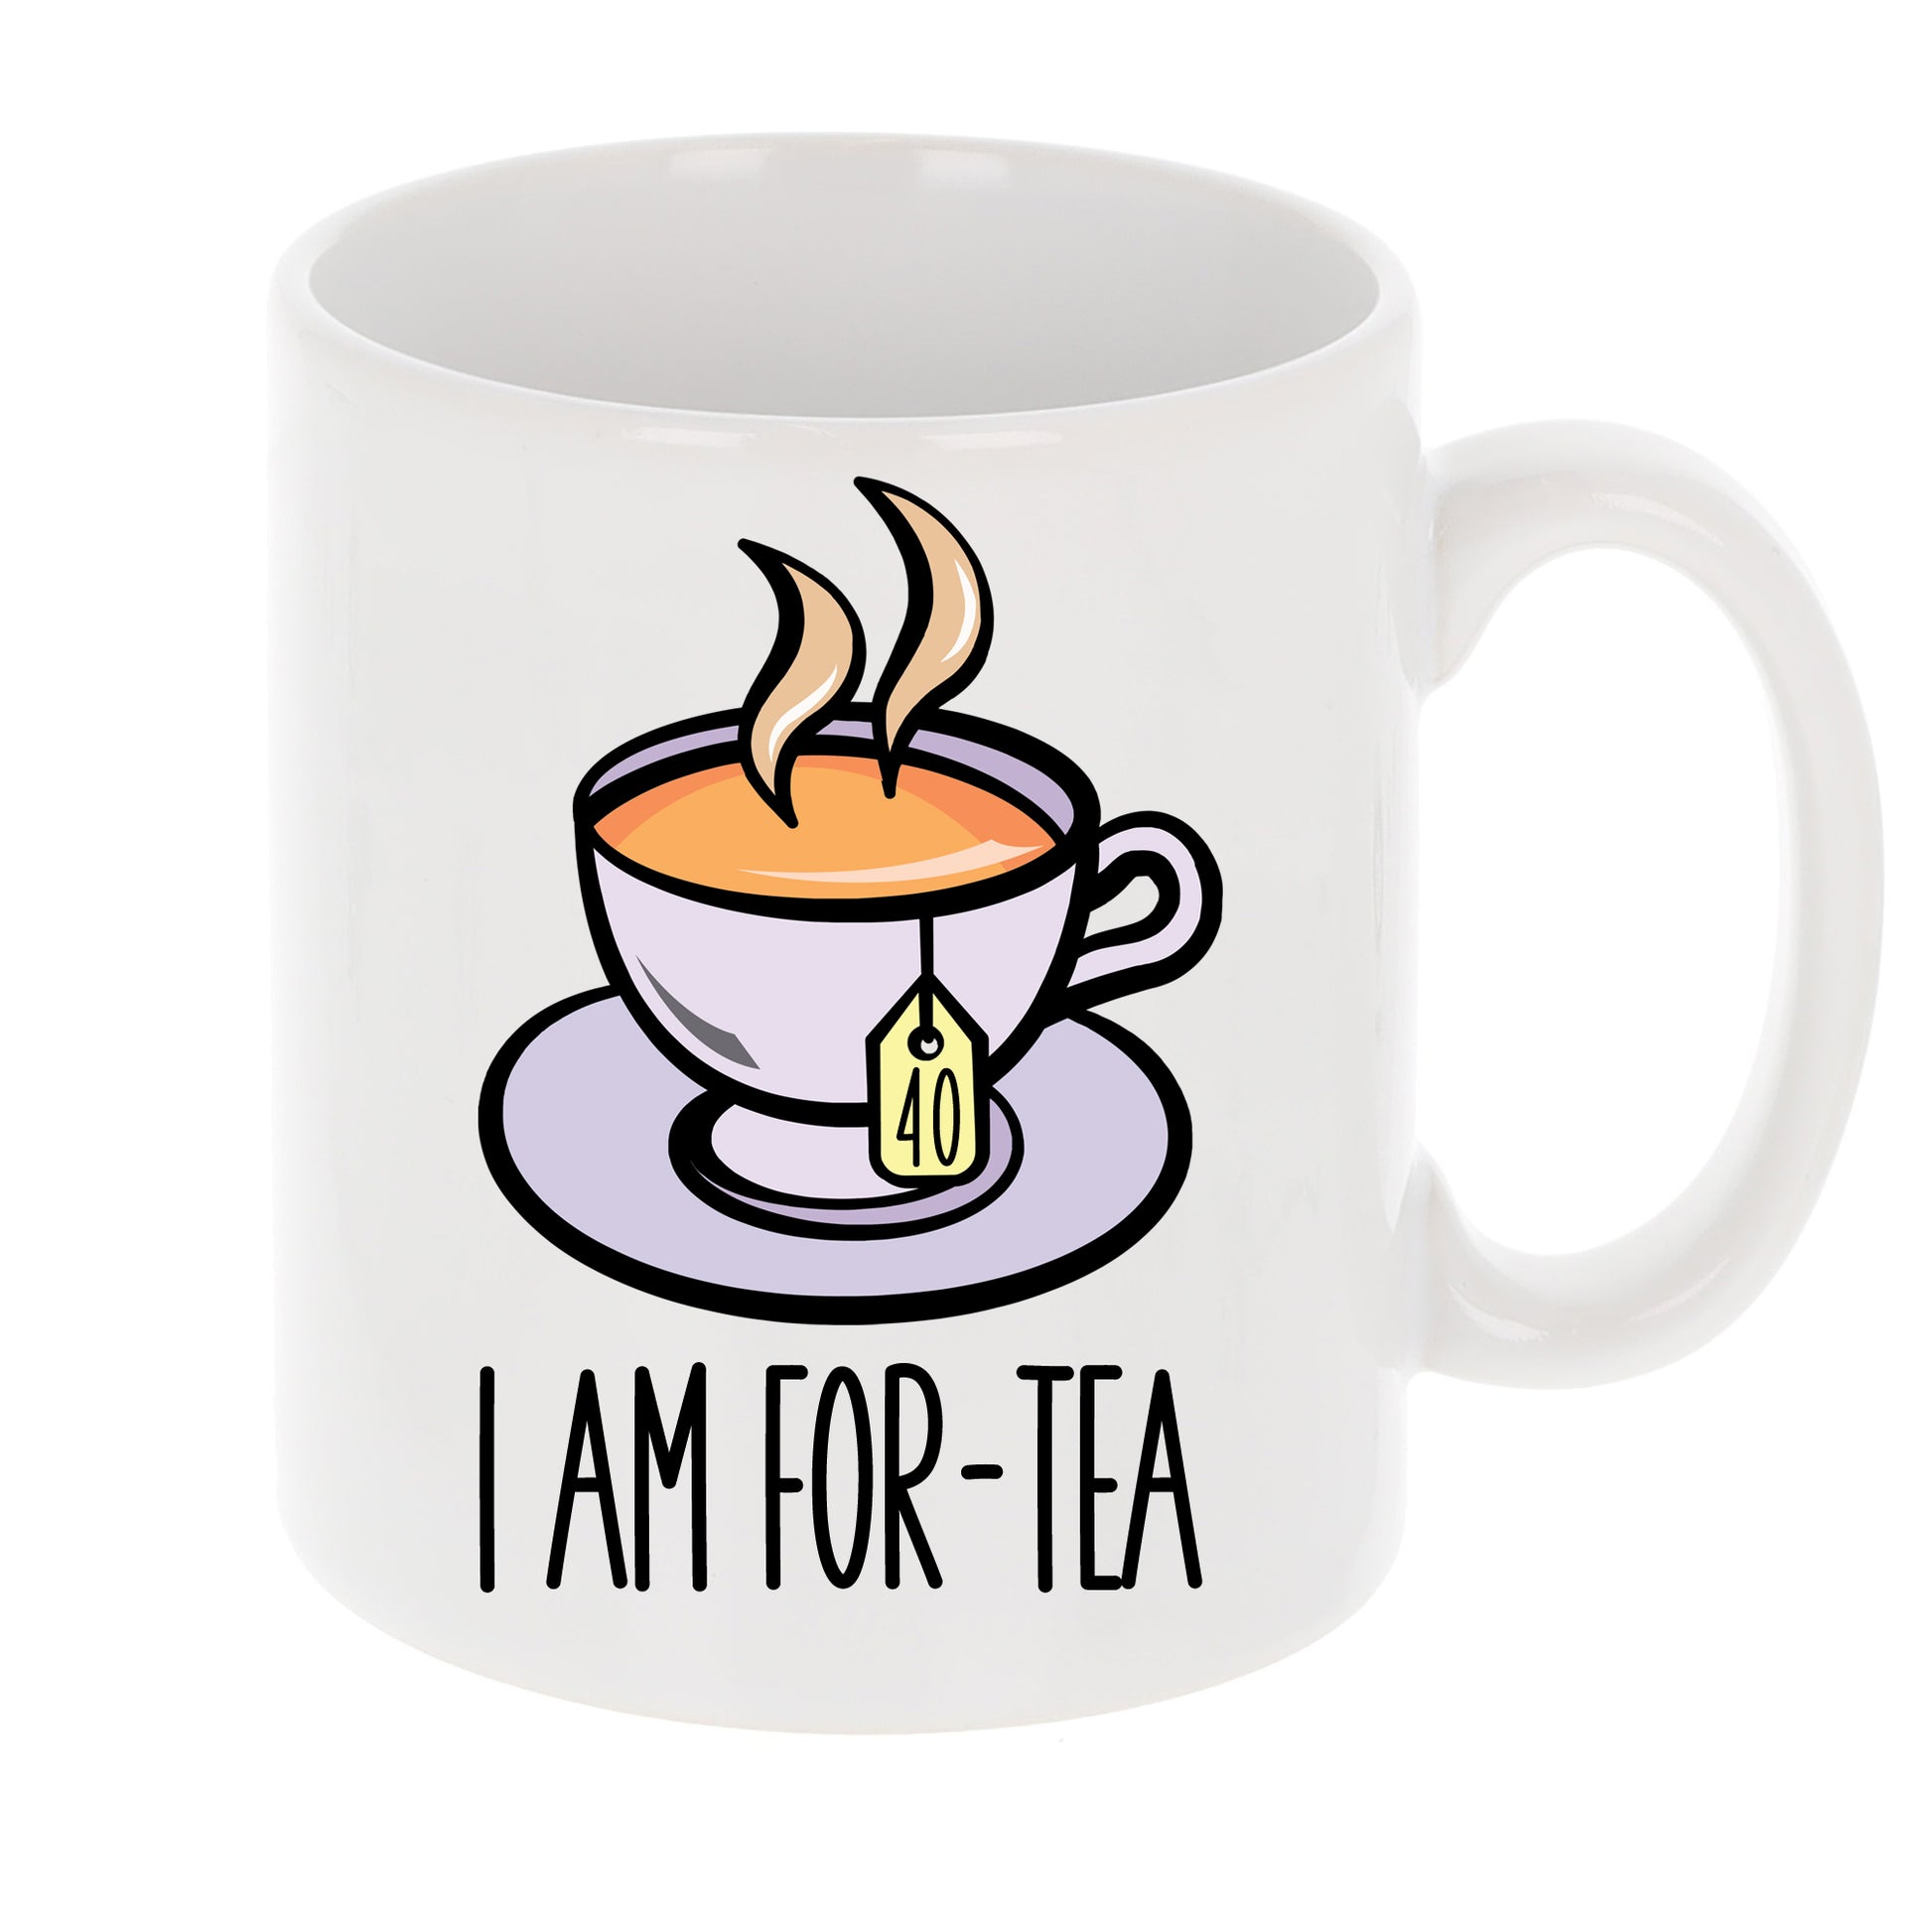 I Am For-Tea Funny 40th Birthday Mug Gift for Tea Lovers  - Always Looking Good -   